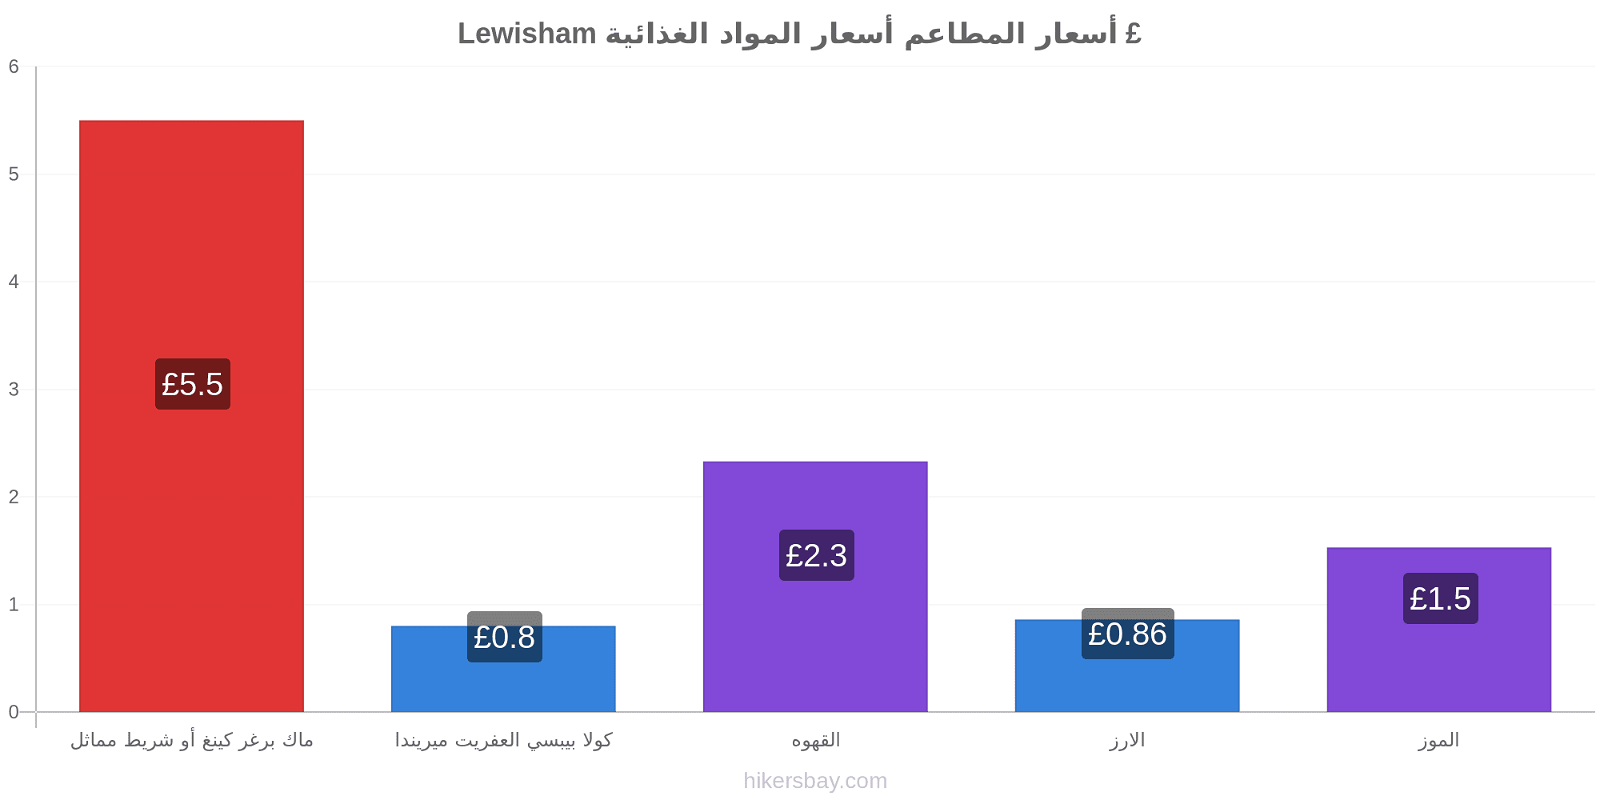 Lewisham تغييرات الأسعار hikersbay.com